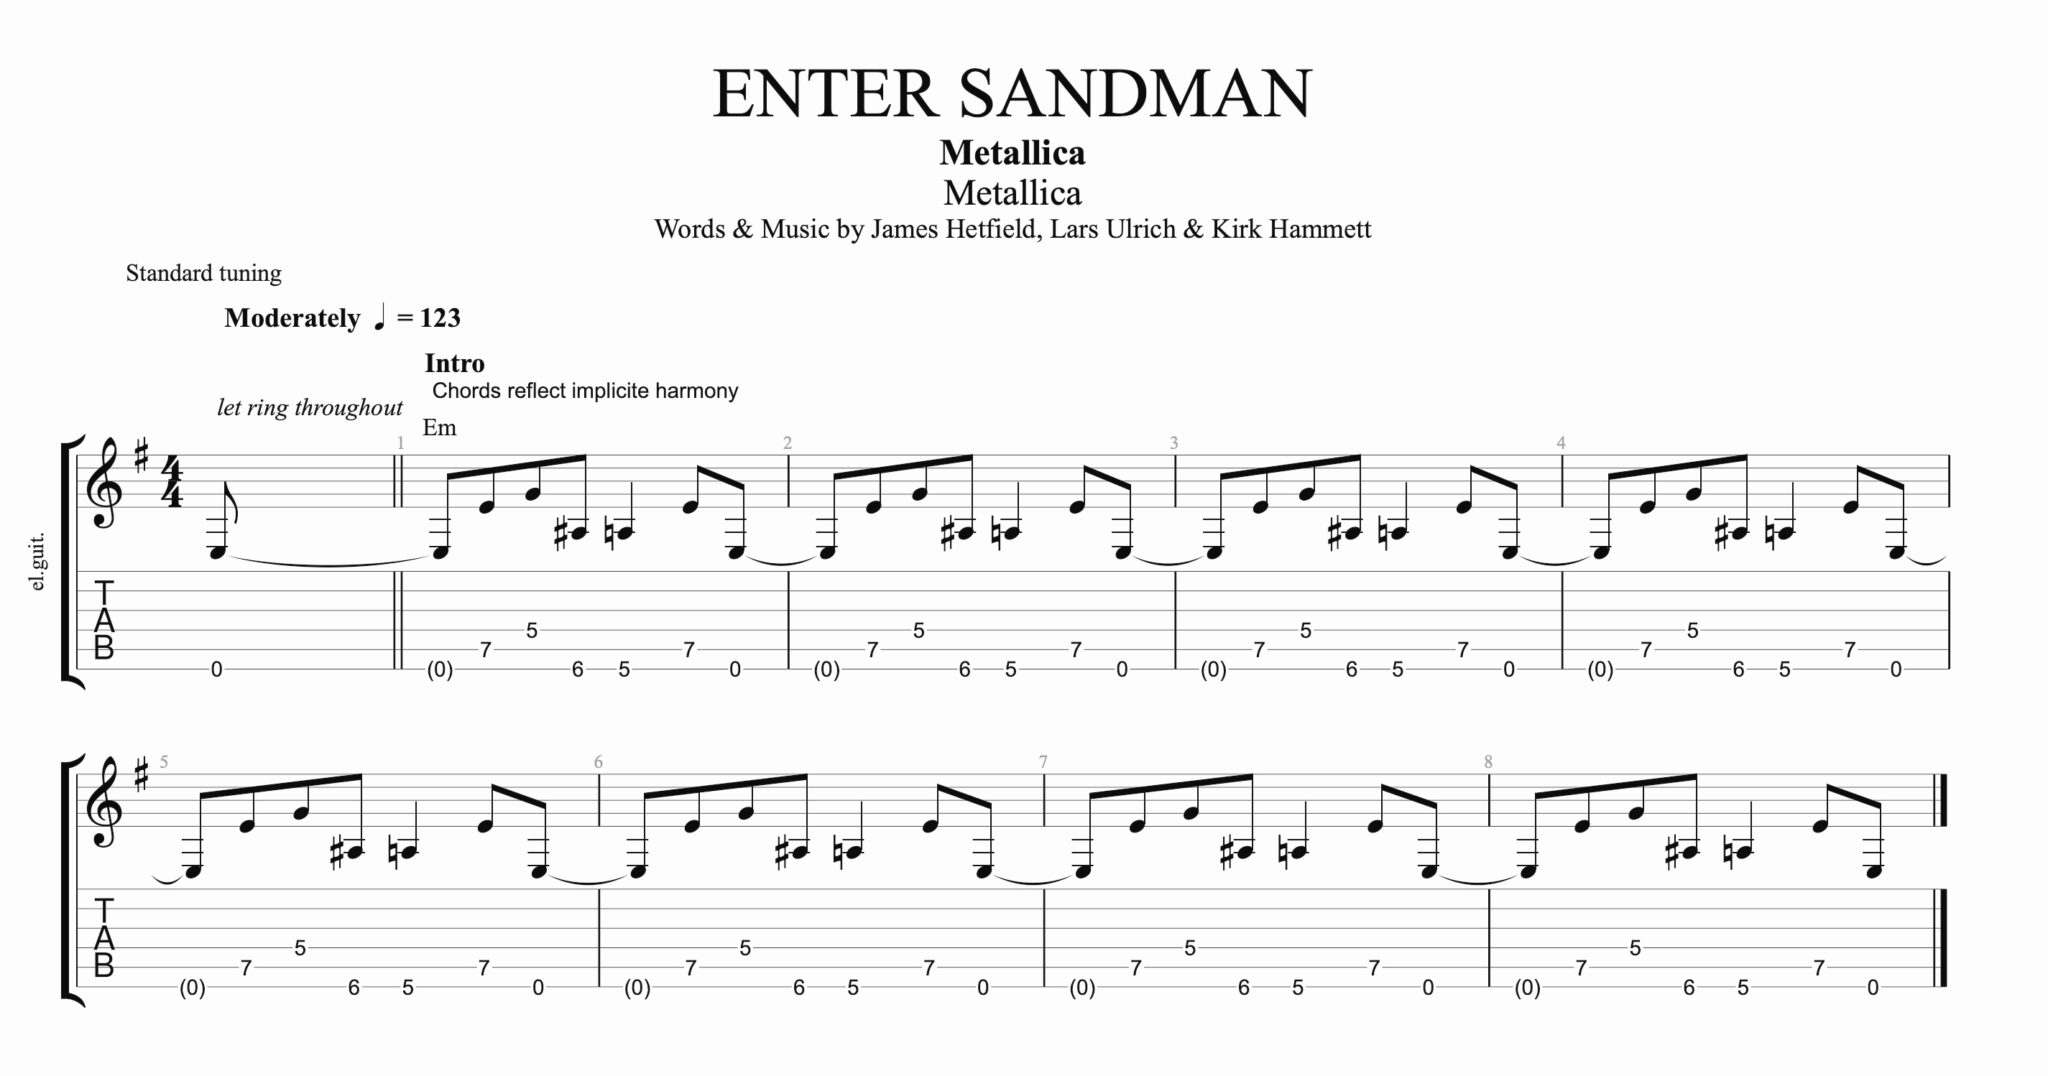 Metallica - Enter Sandman sheet music for guitar (chords) [PDF]